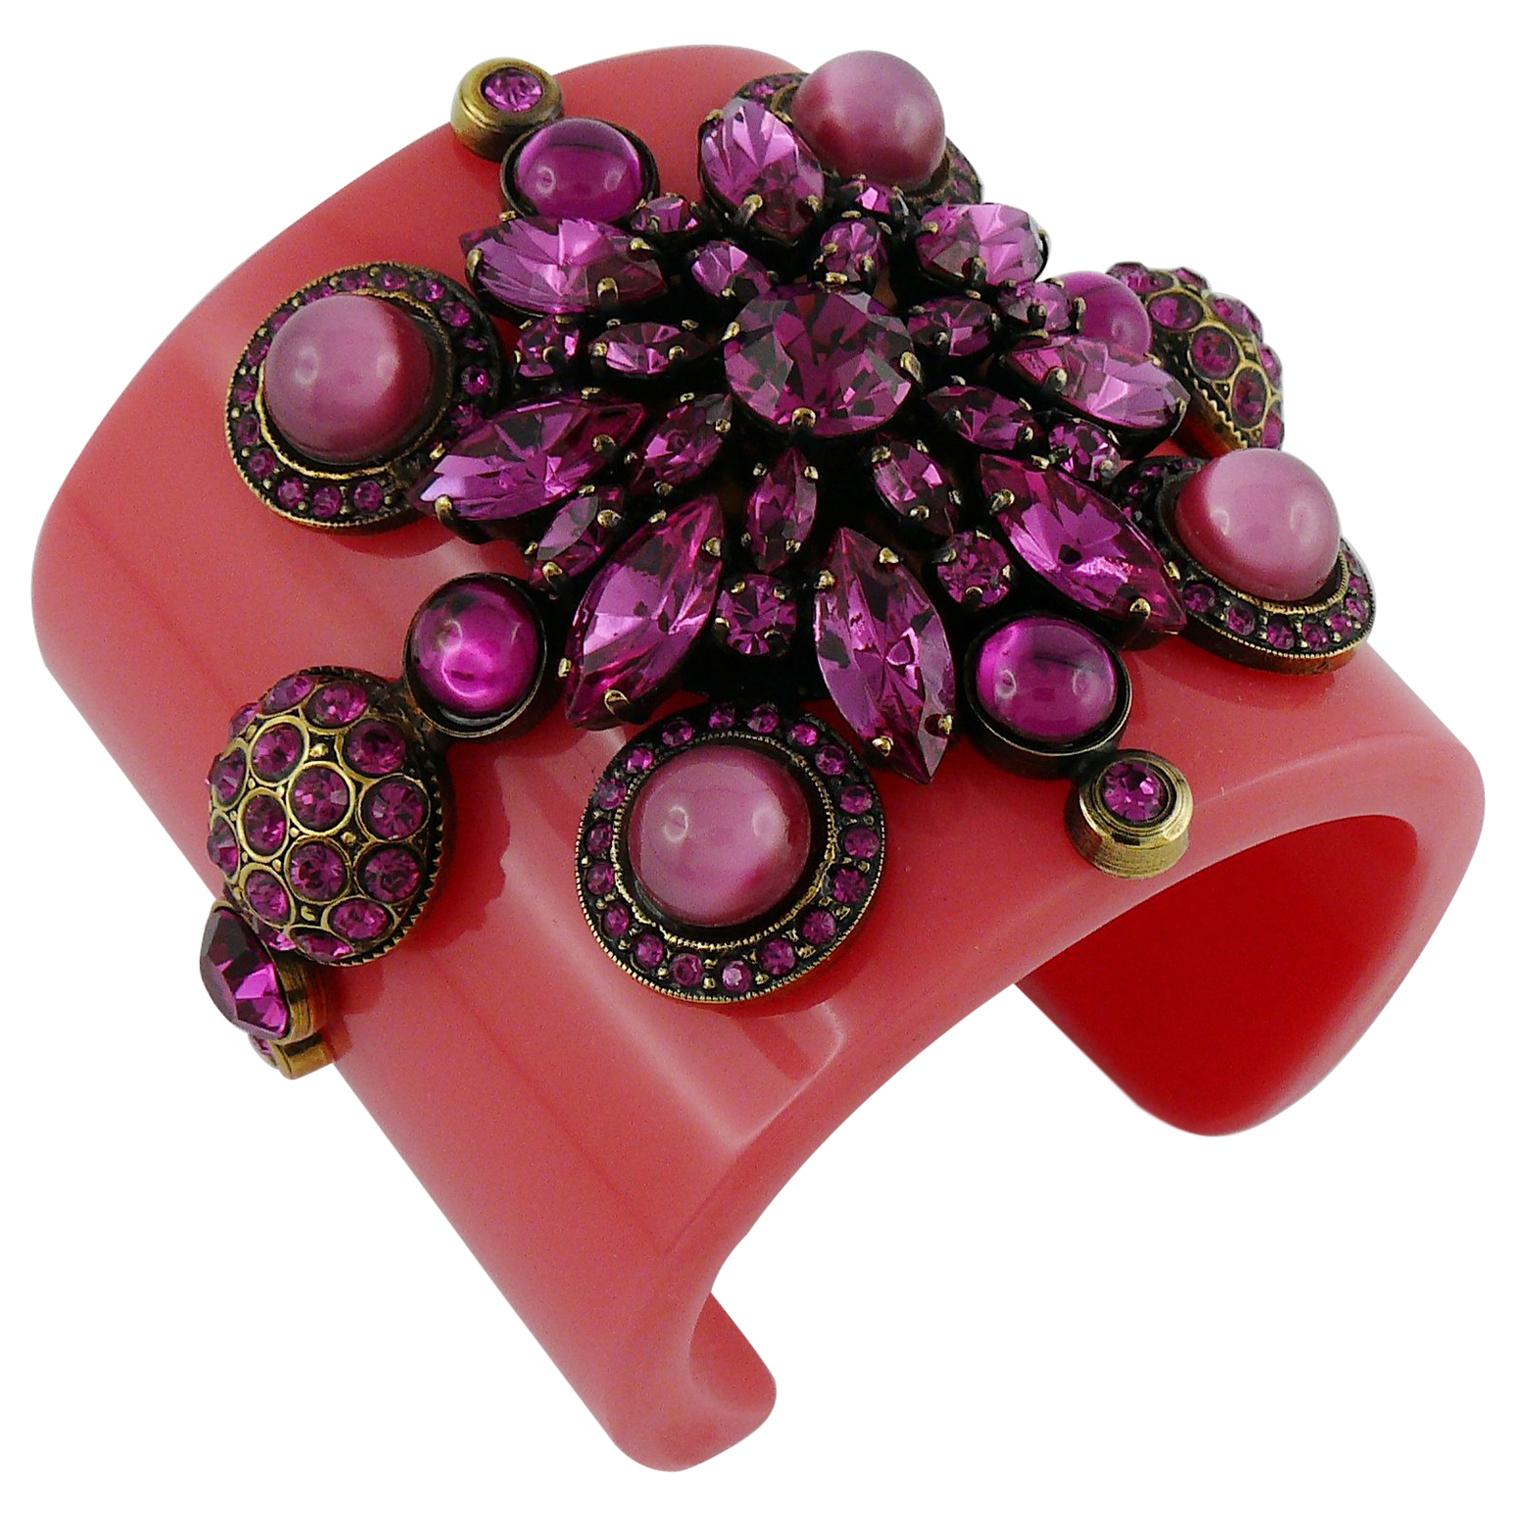 Emilion Pucci Spring Summer 2012 Jewelled Pink Resin Cuff Bracelet